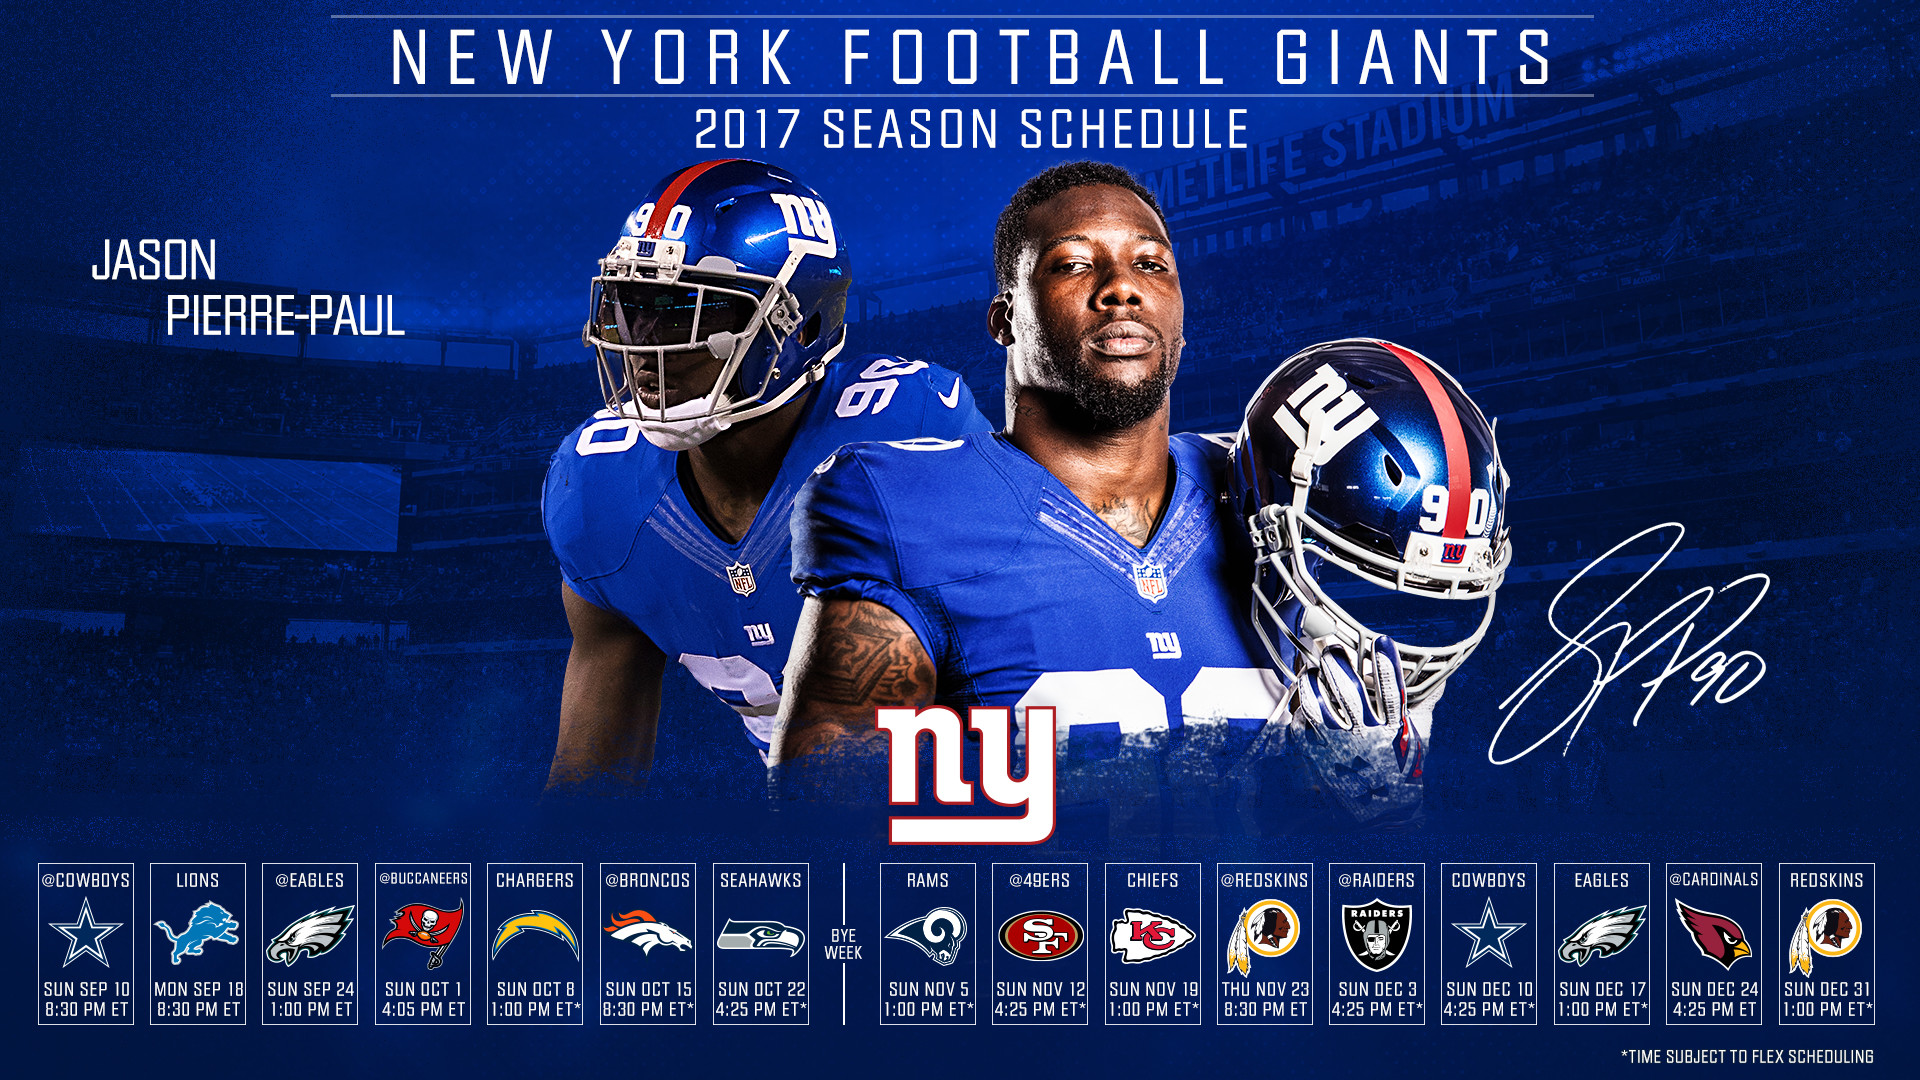 Click one of the thumbnails below to download the New York Giants 2017 schedule desktop wallpaper. For desktop wallpapers, right click on the image and